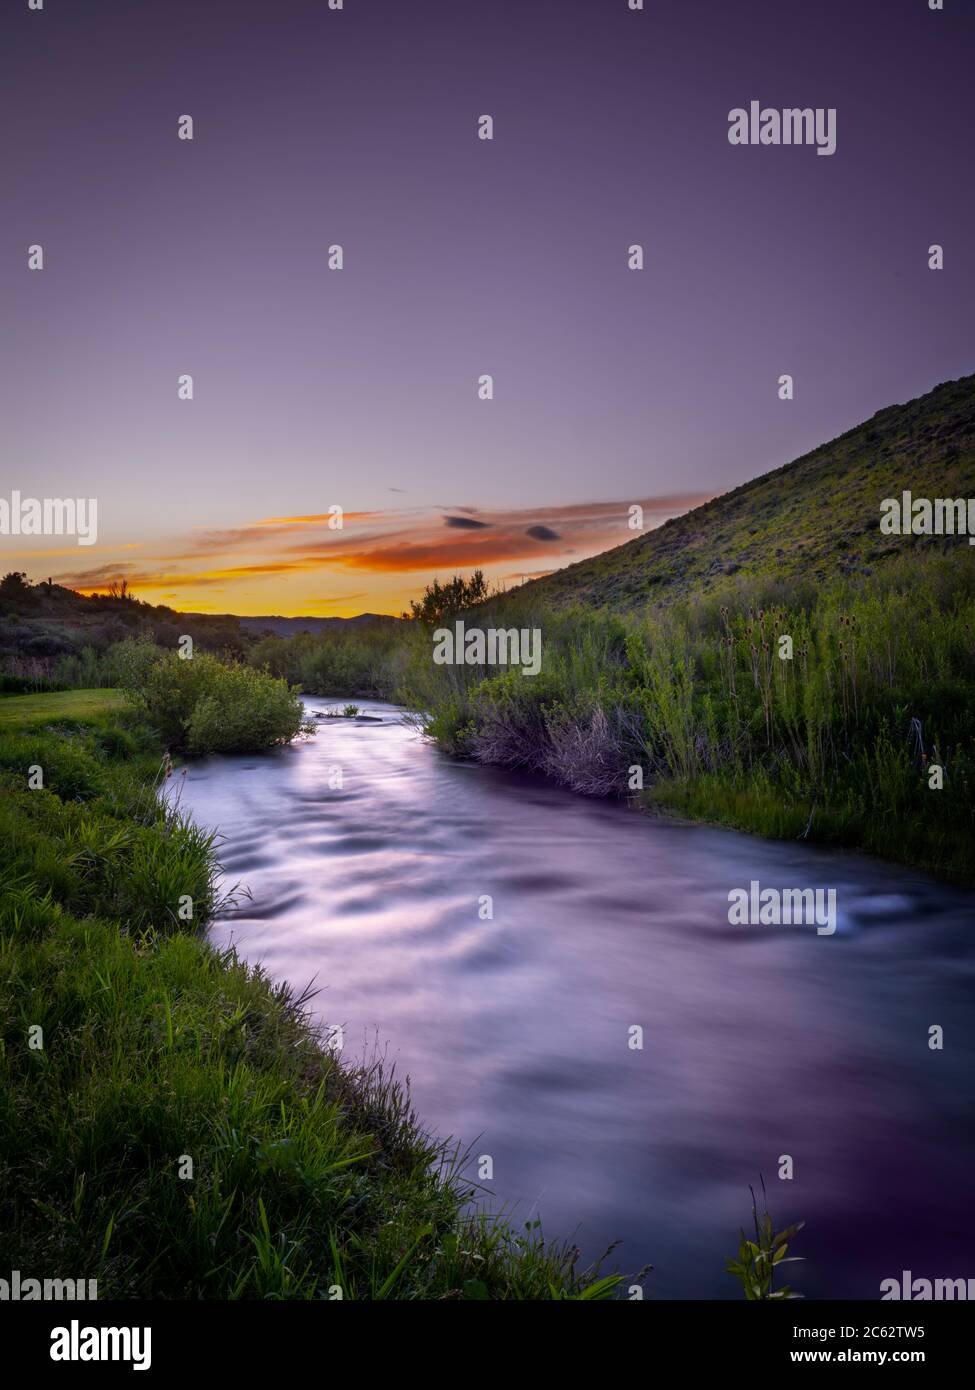 Small stream at sunset, Park City Utah, USA Stock Photo